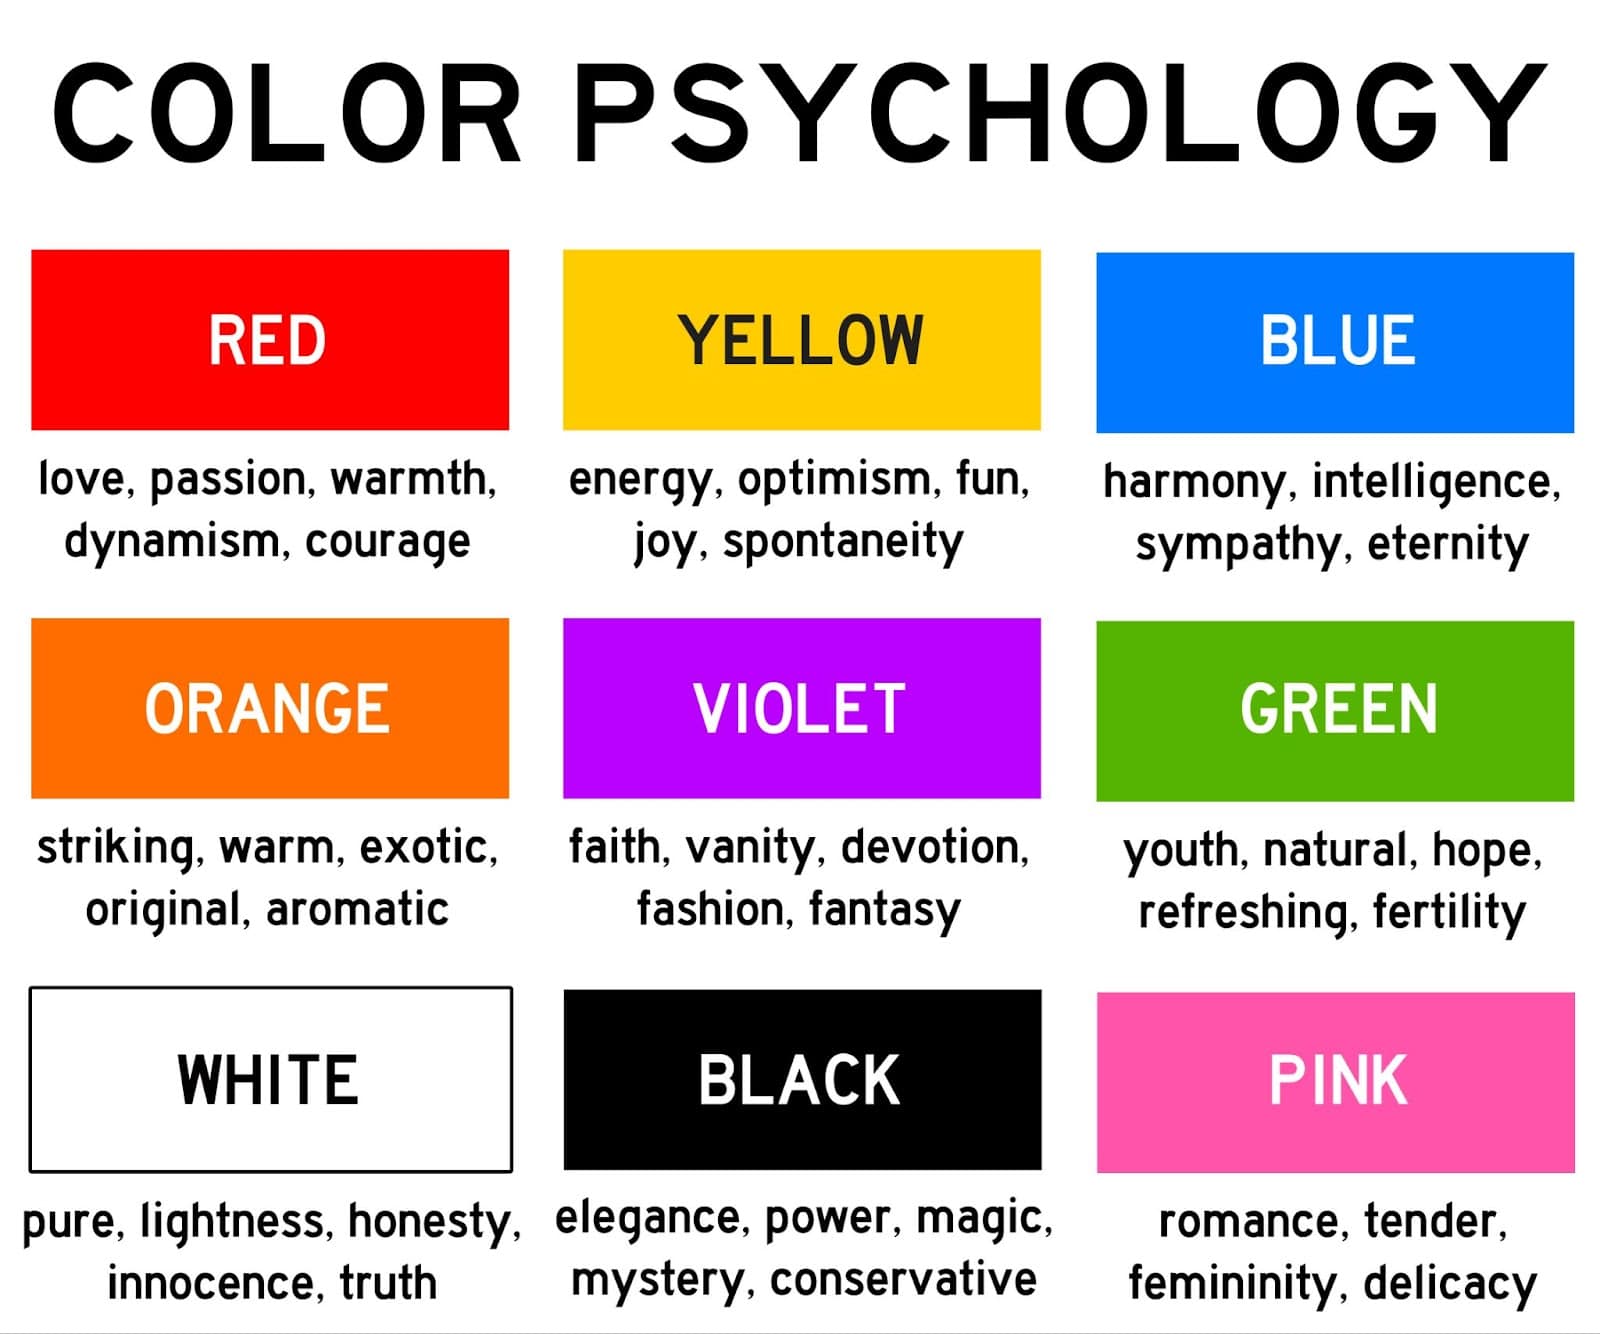 The basics of color psychology